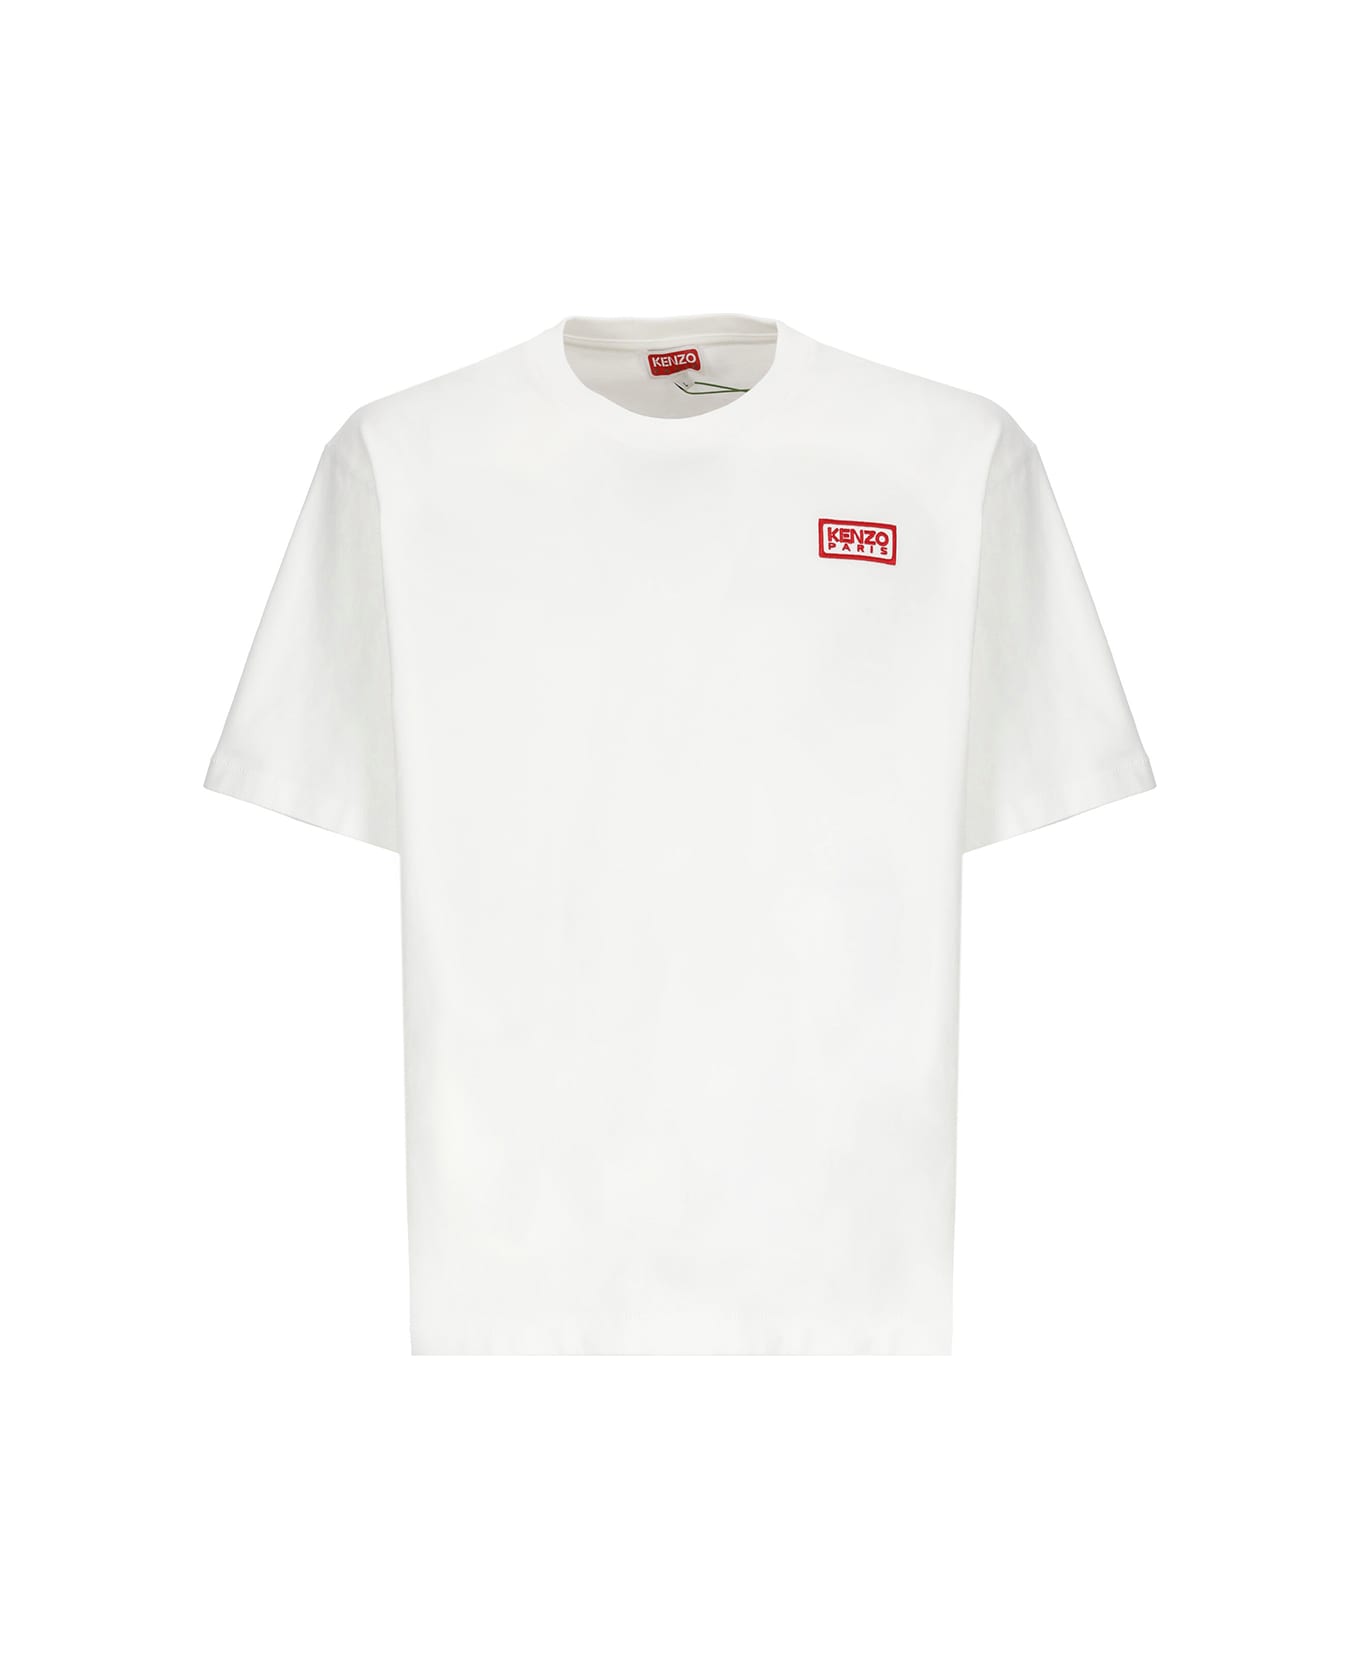 Kenzo T-shirt - White